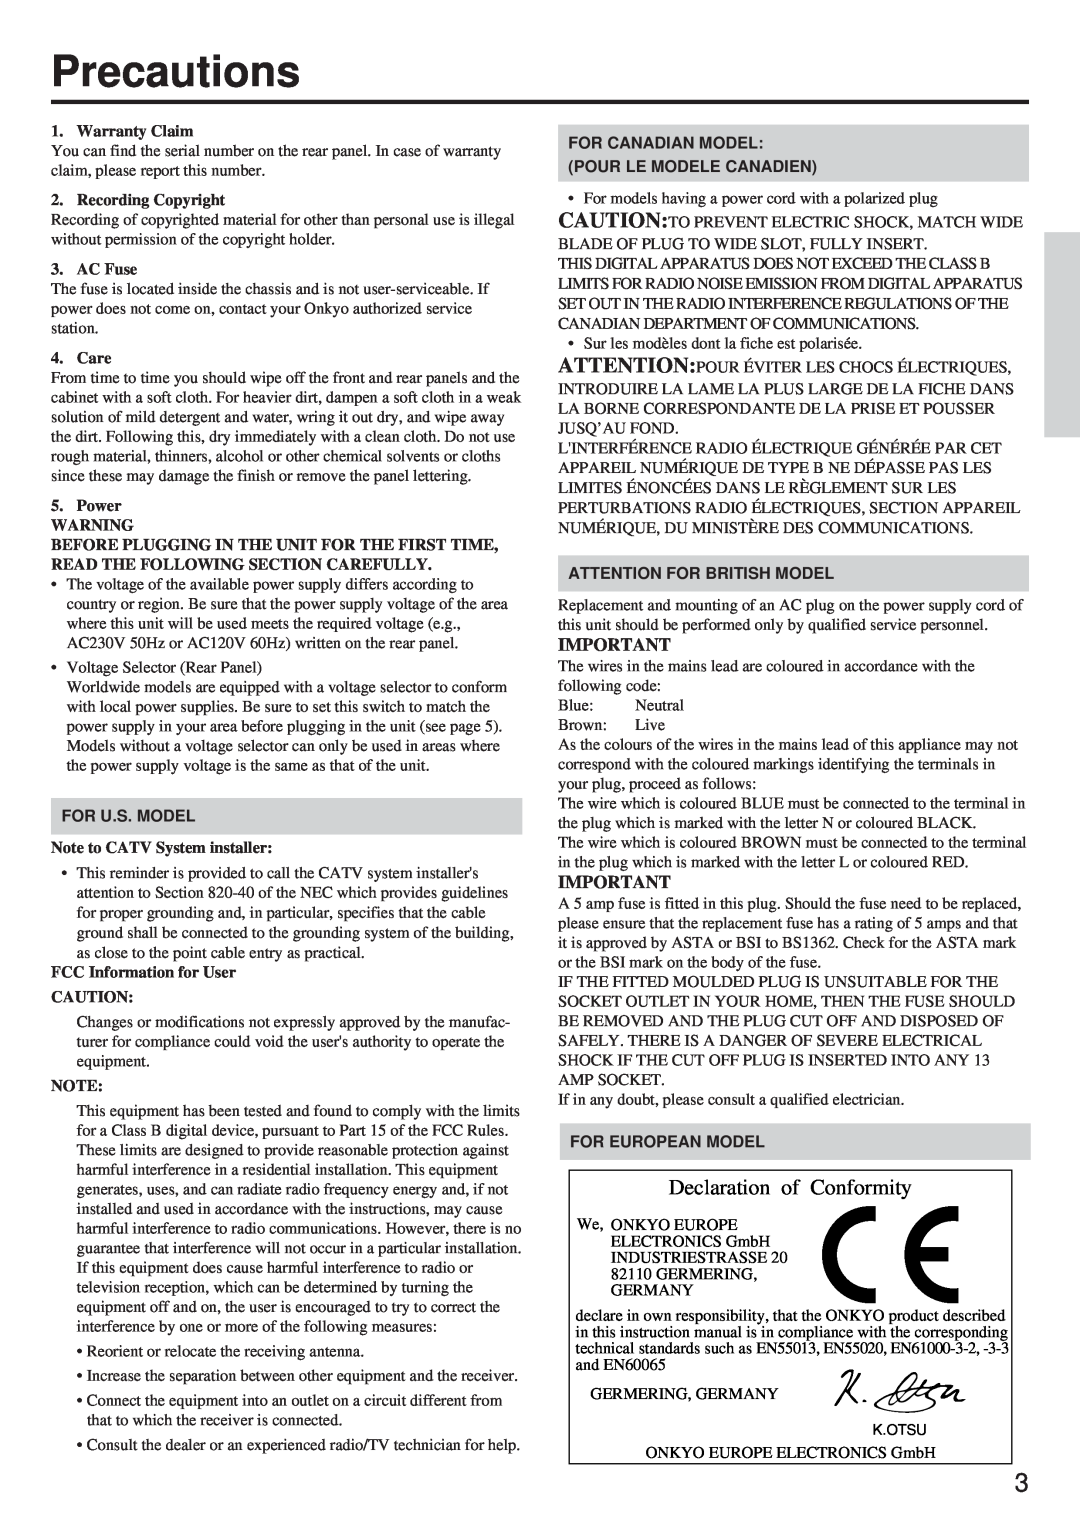 Onkyo TX-DS656 instruction manual Precautions, Declaration of Conformity 